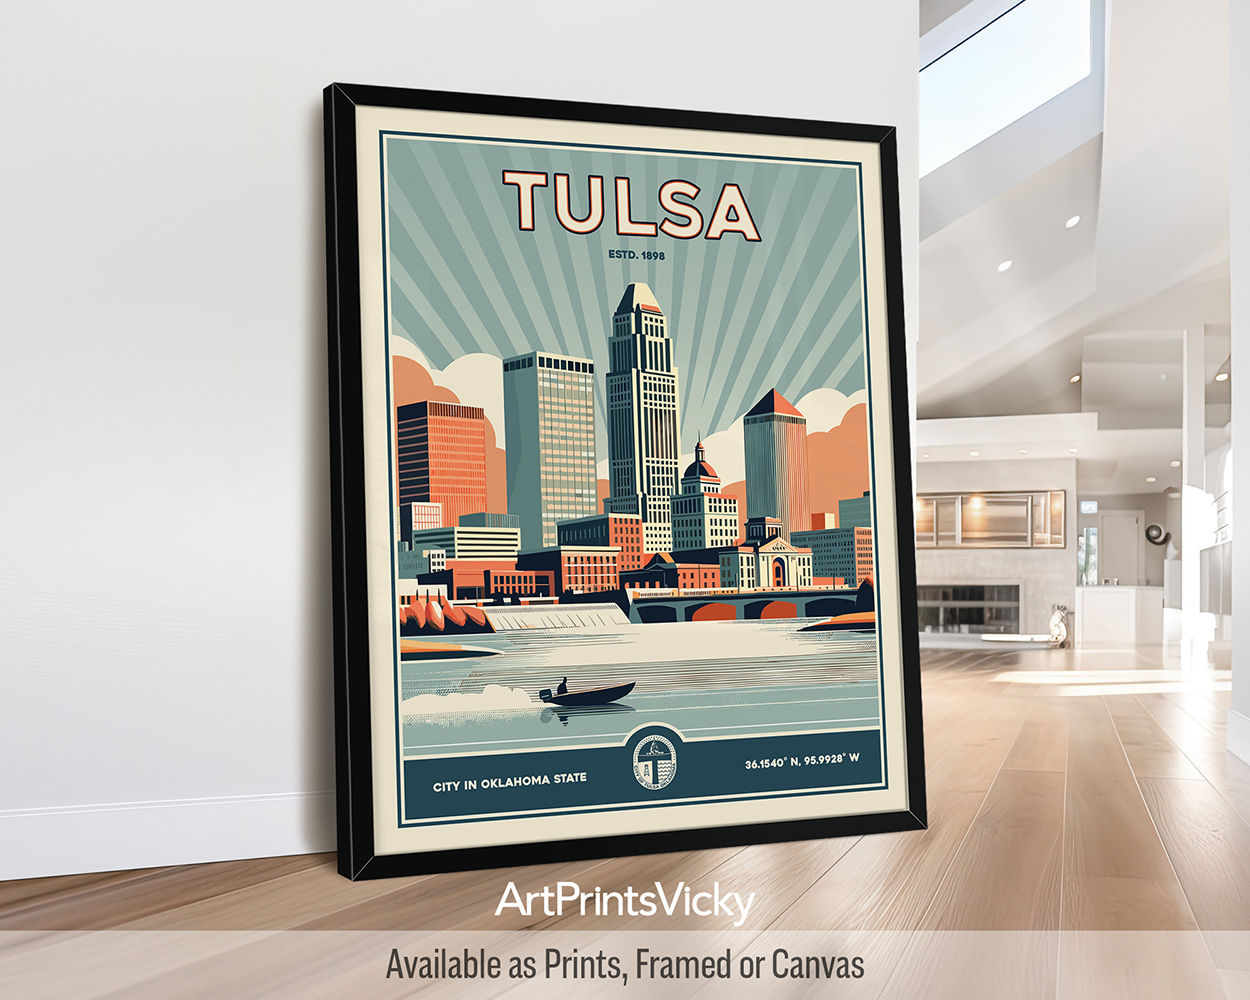 Tulsa Poster Inspired by Retro Travel Art